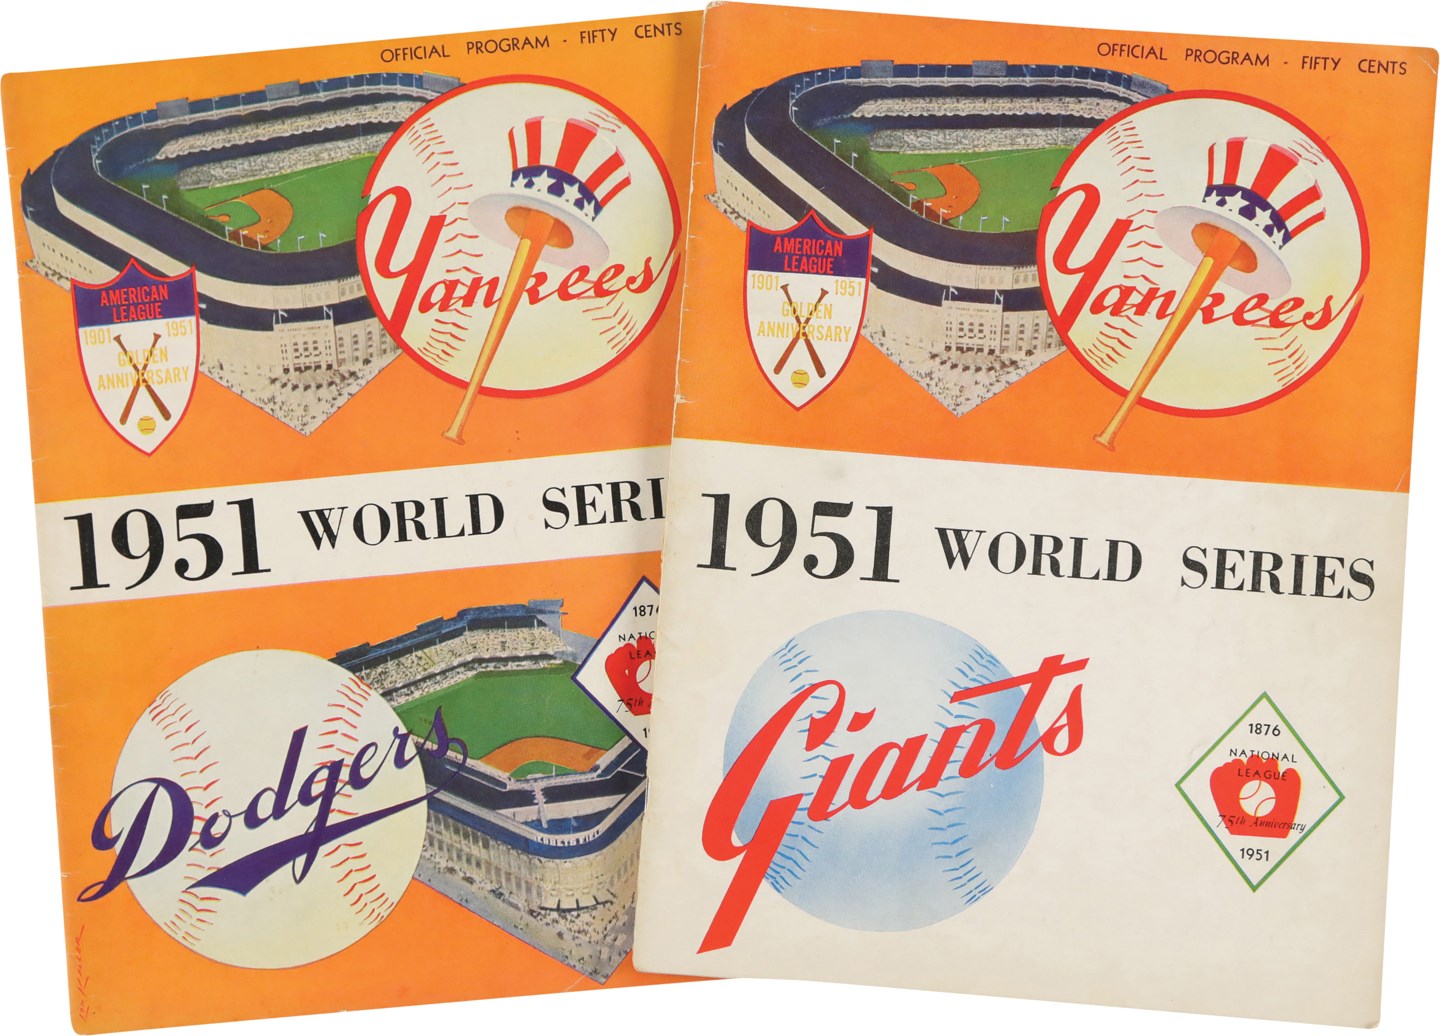 Baseball Memorabilia - 1951 World Series Program Pair Including Scarce "Phantom" Program vs. Dodgers